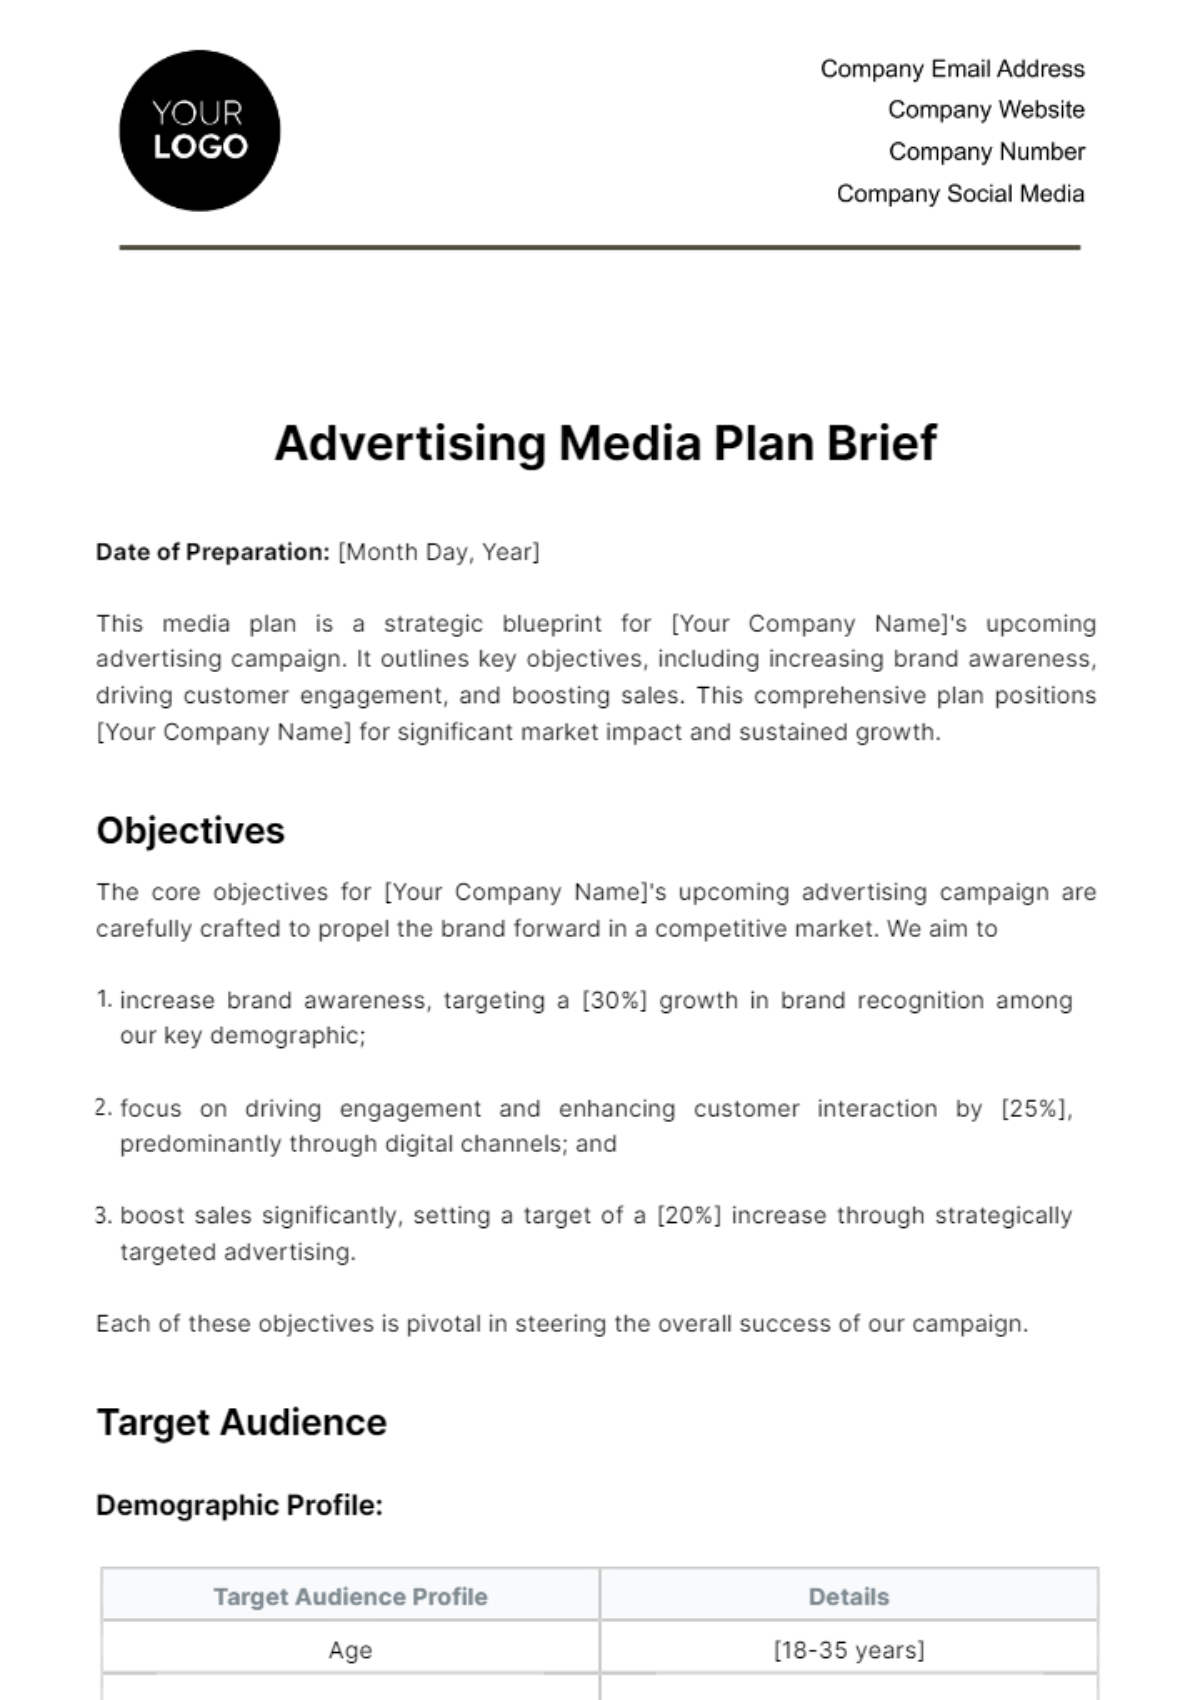 Advertising Media Plan Brief Template